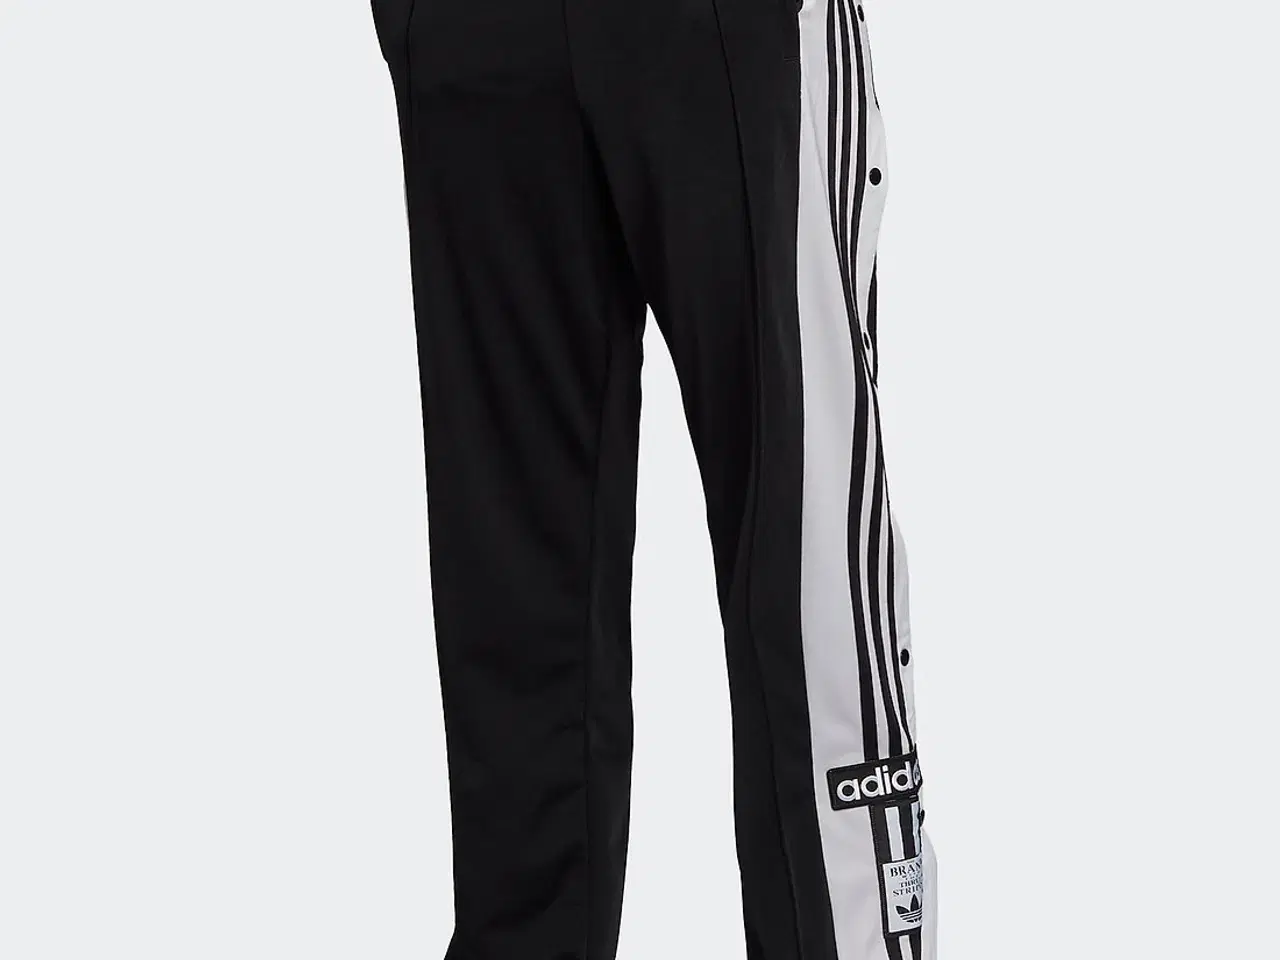 Billede 1 - Adidas Air trænings bukser med knapper ned lang